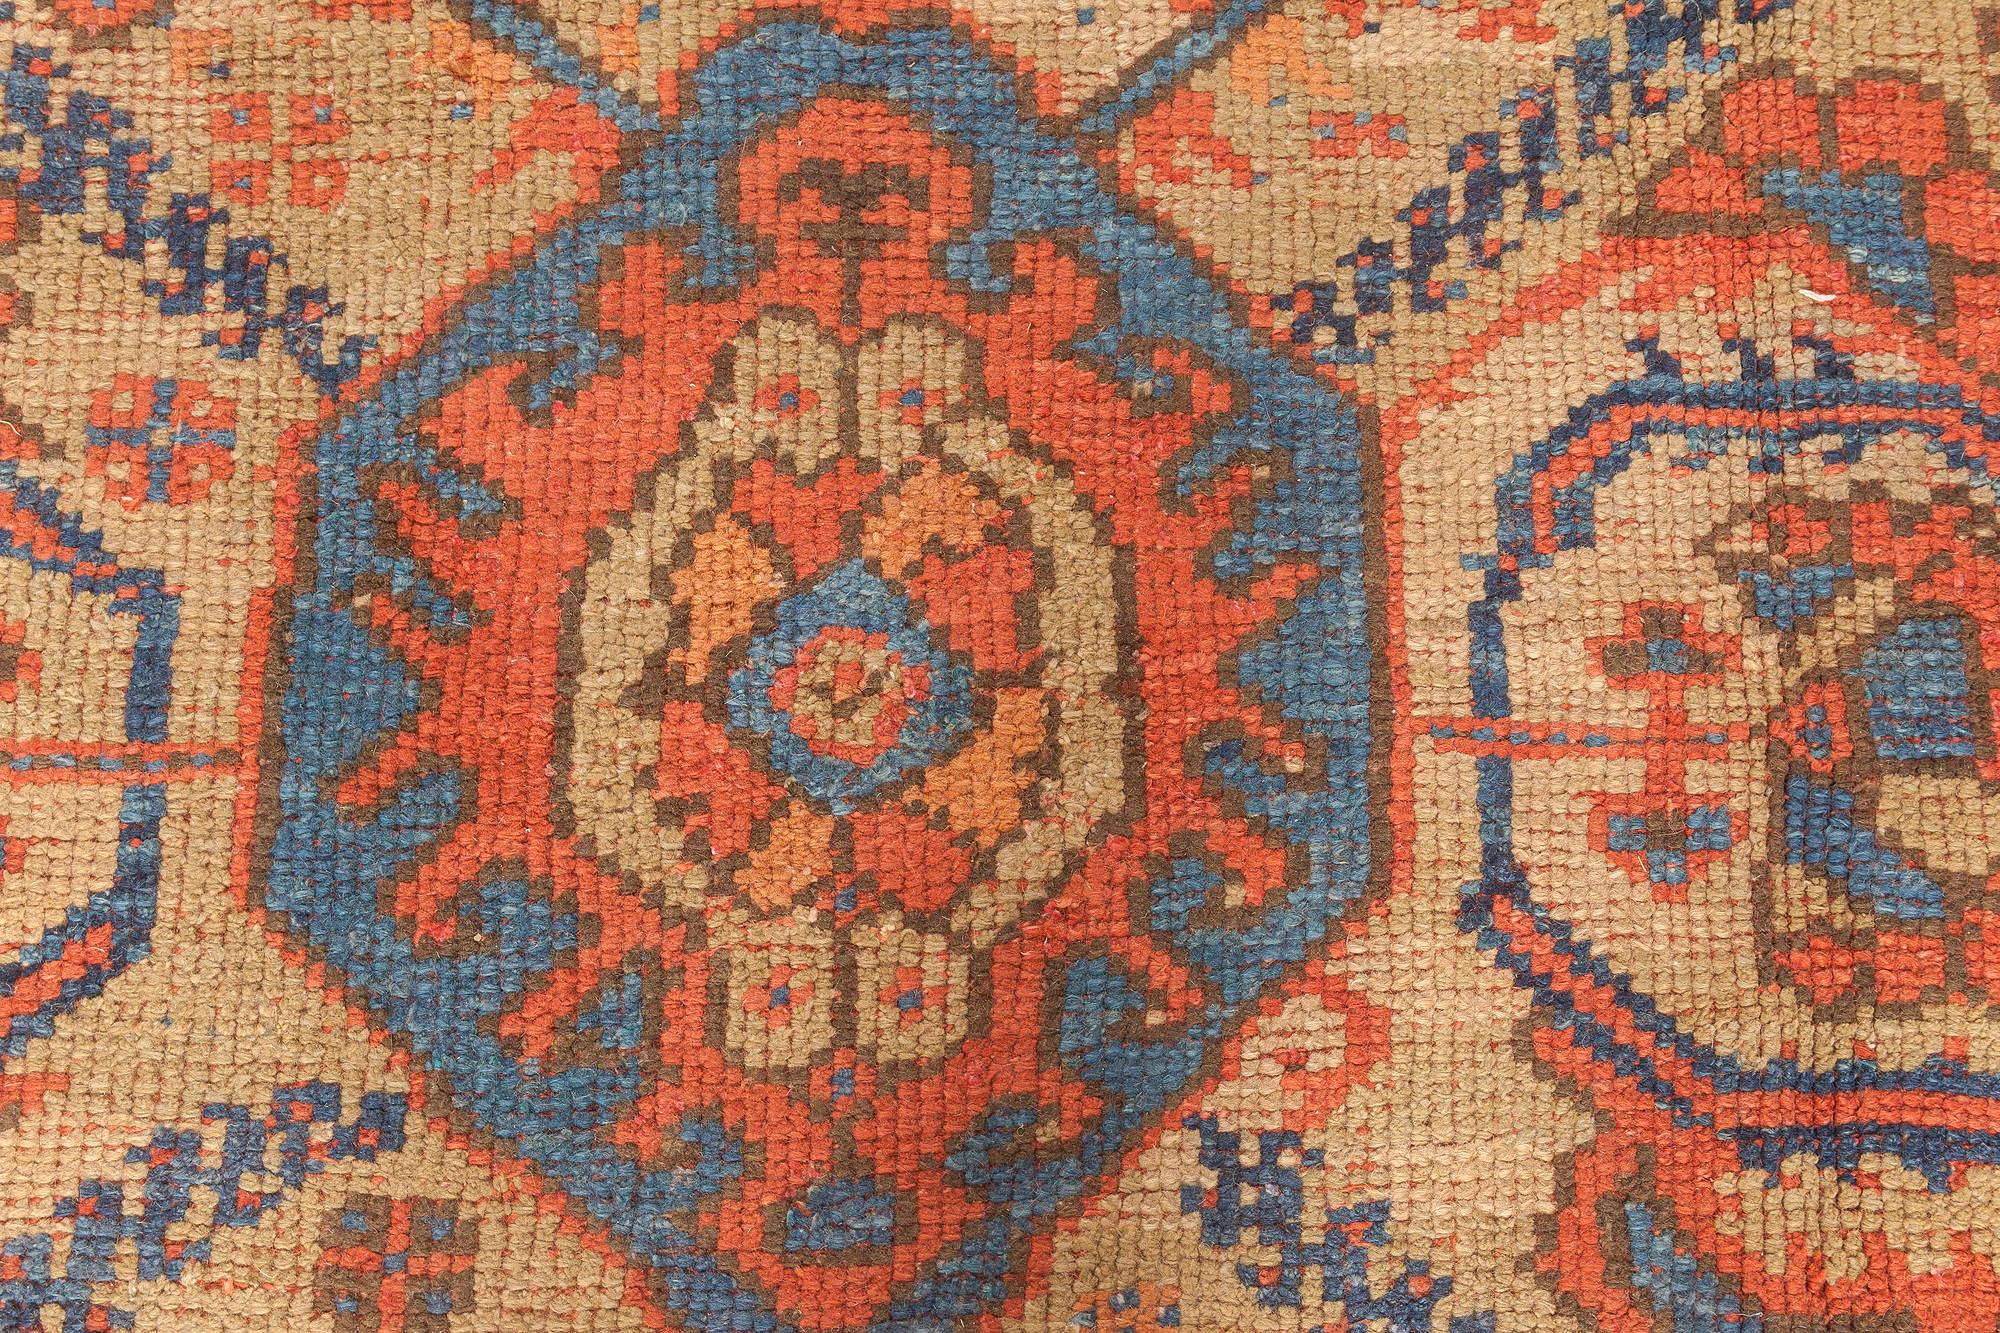 19th century crab design handwoven wool carpet
Size: 14'4